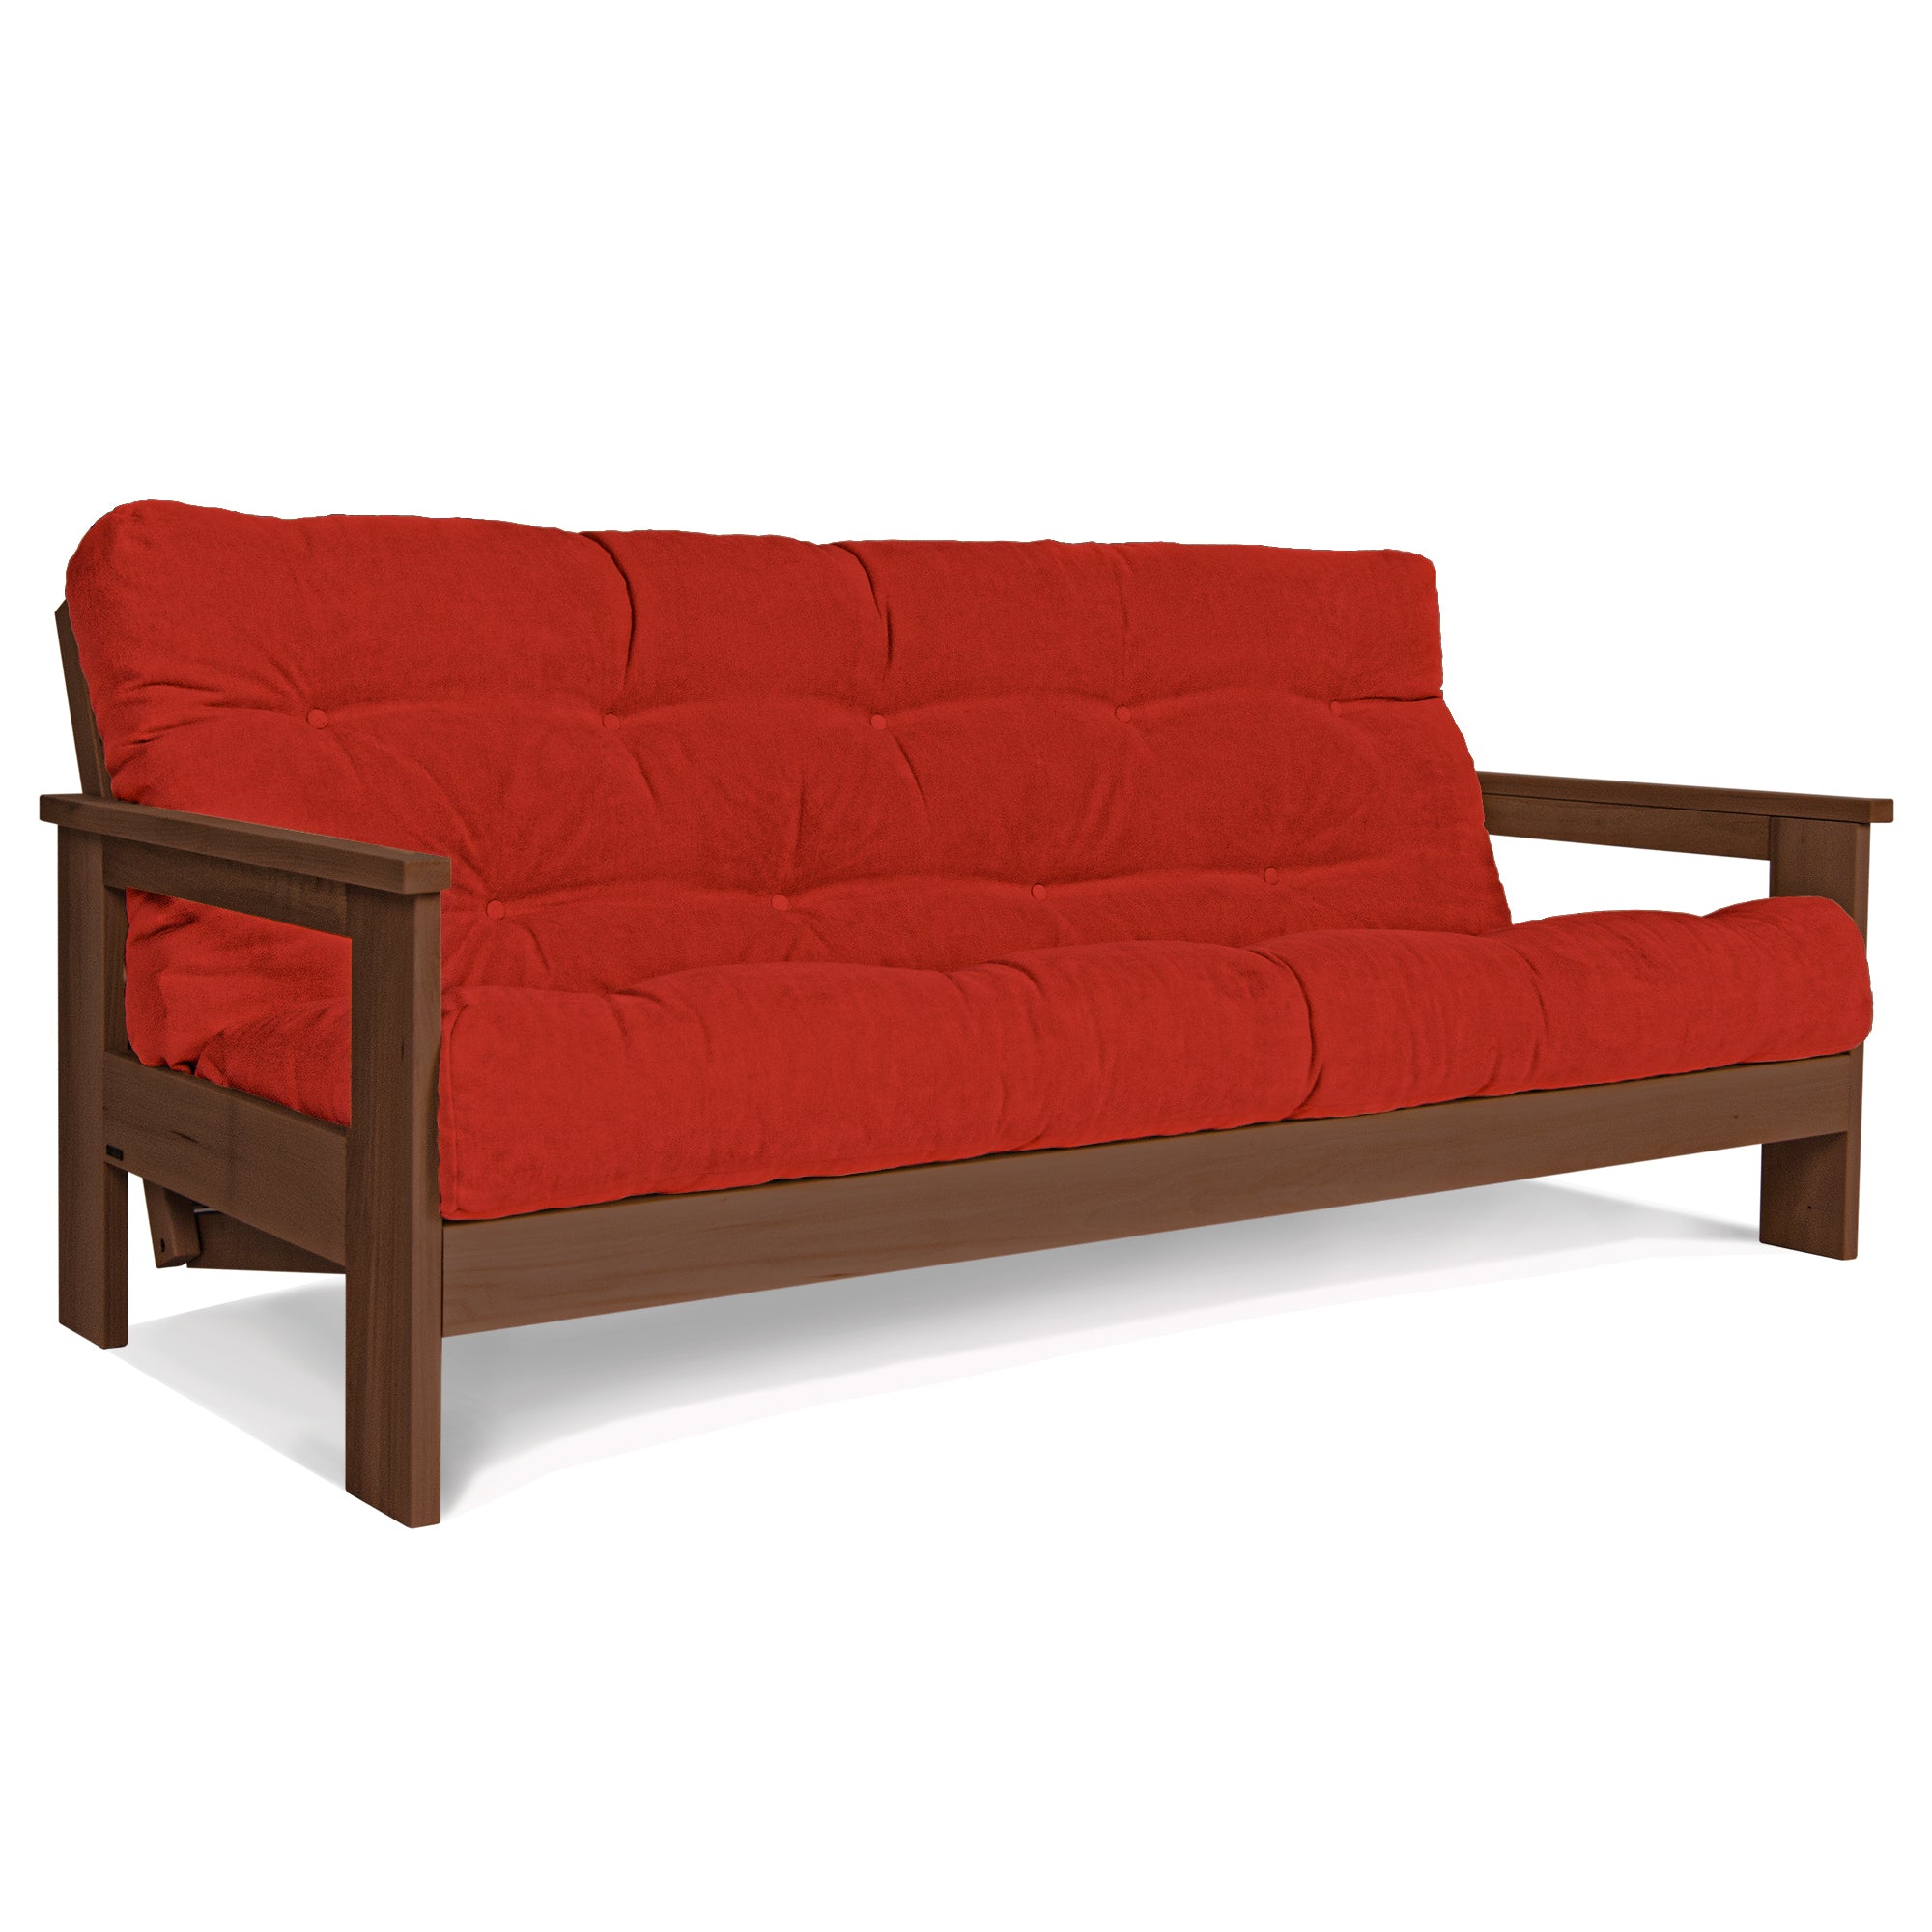 MEXICO Folding Sofa Bed-Beech Wood Frame-Walnut Colour-gray fabric colour-red fabric colour